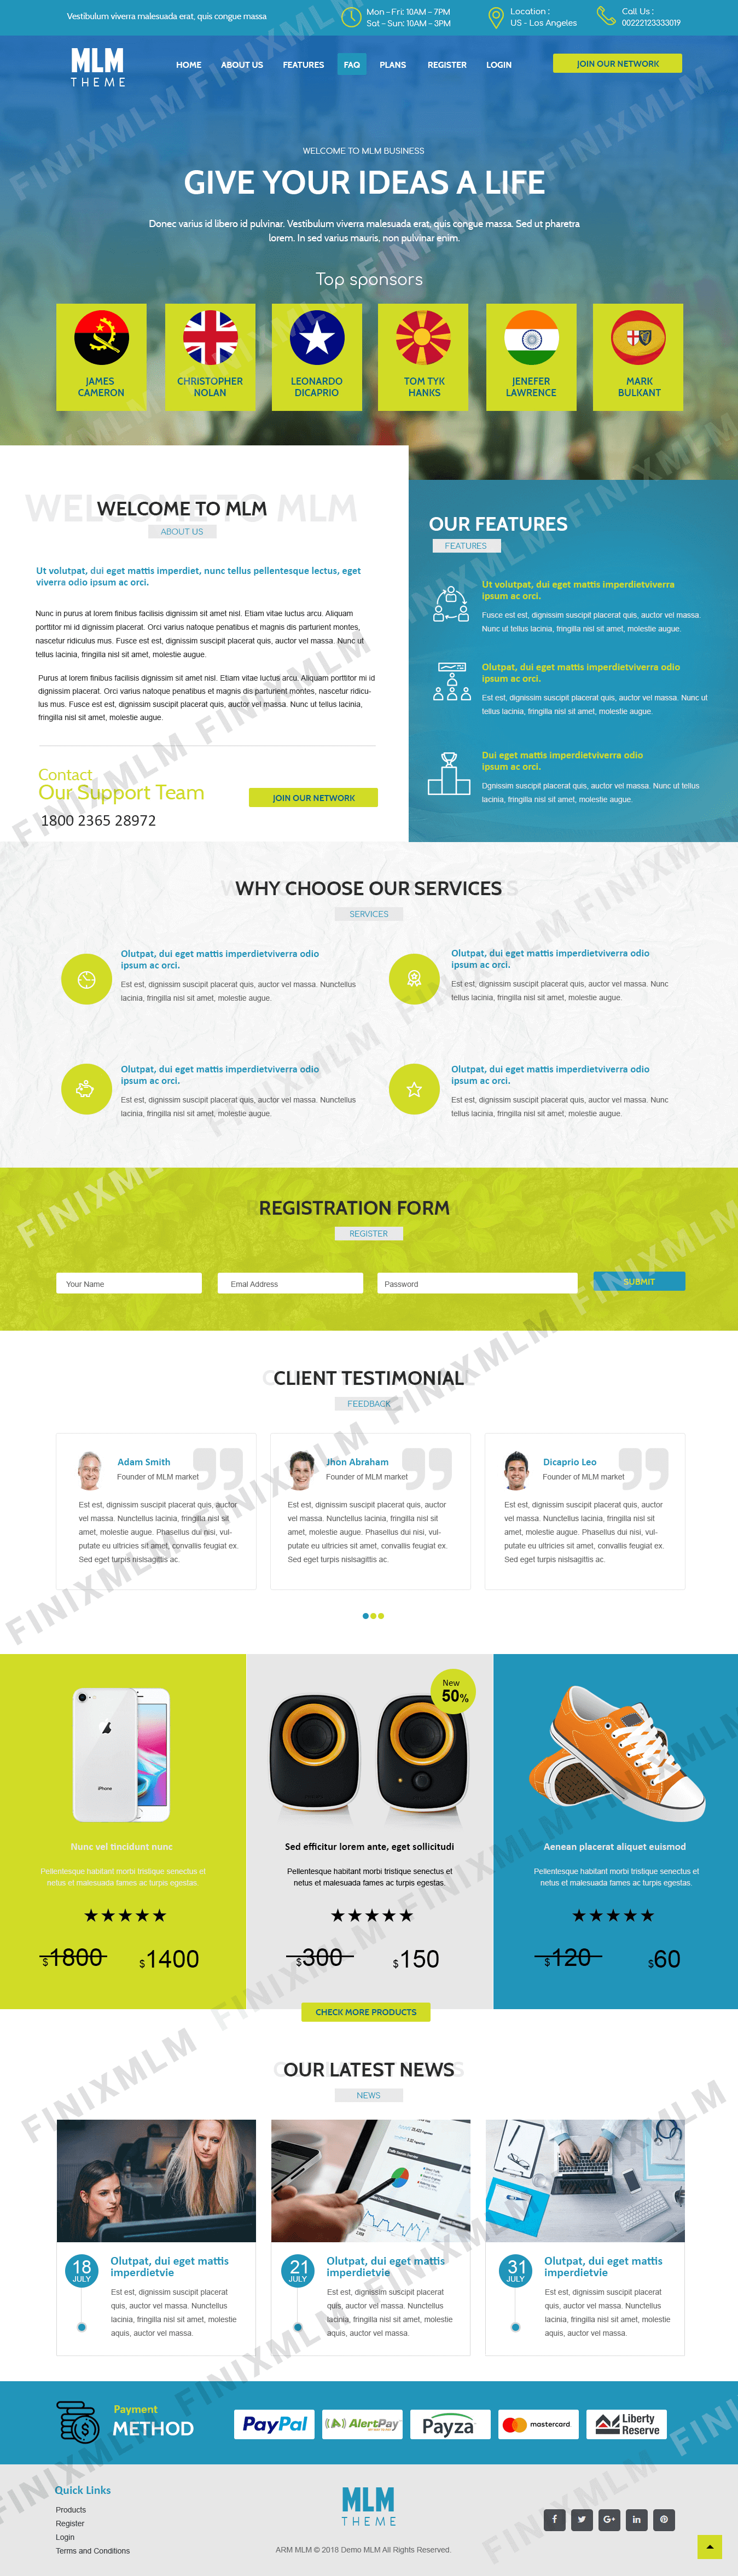 MLM website template